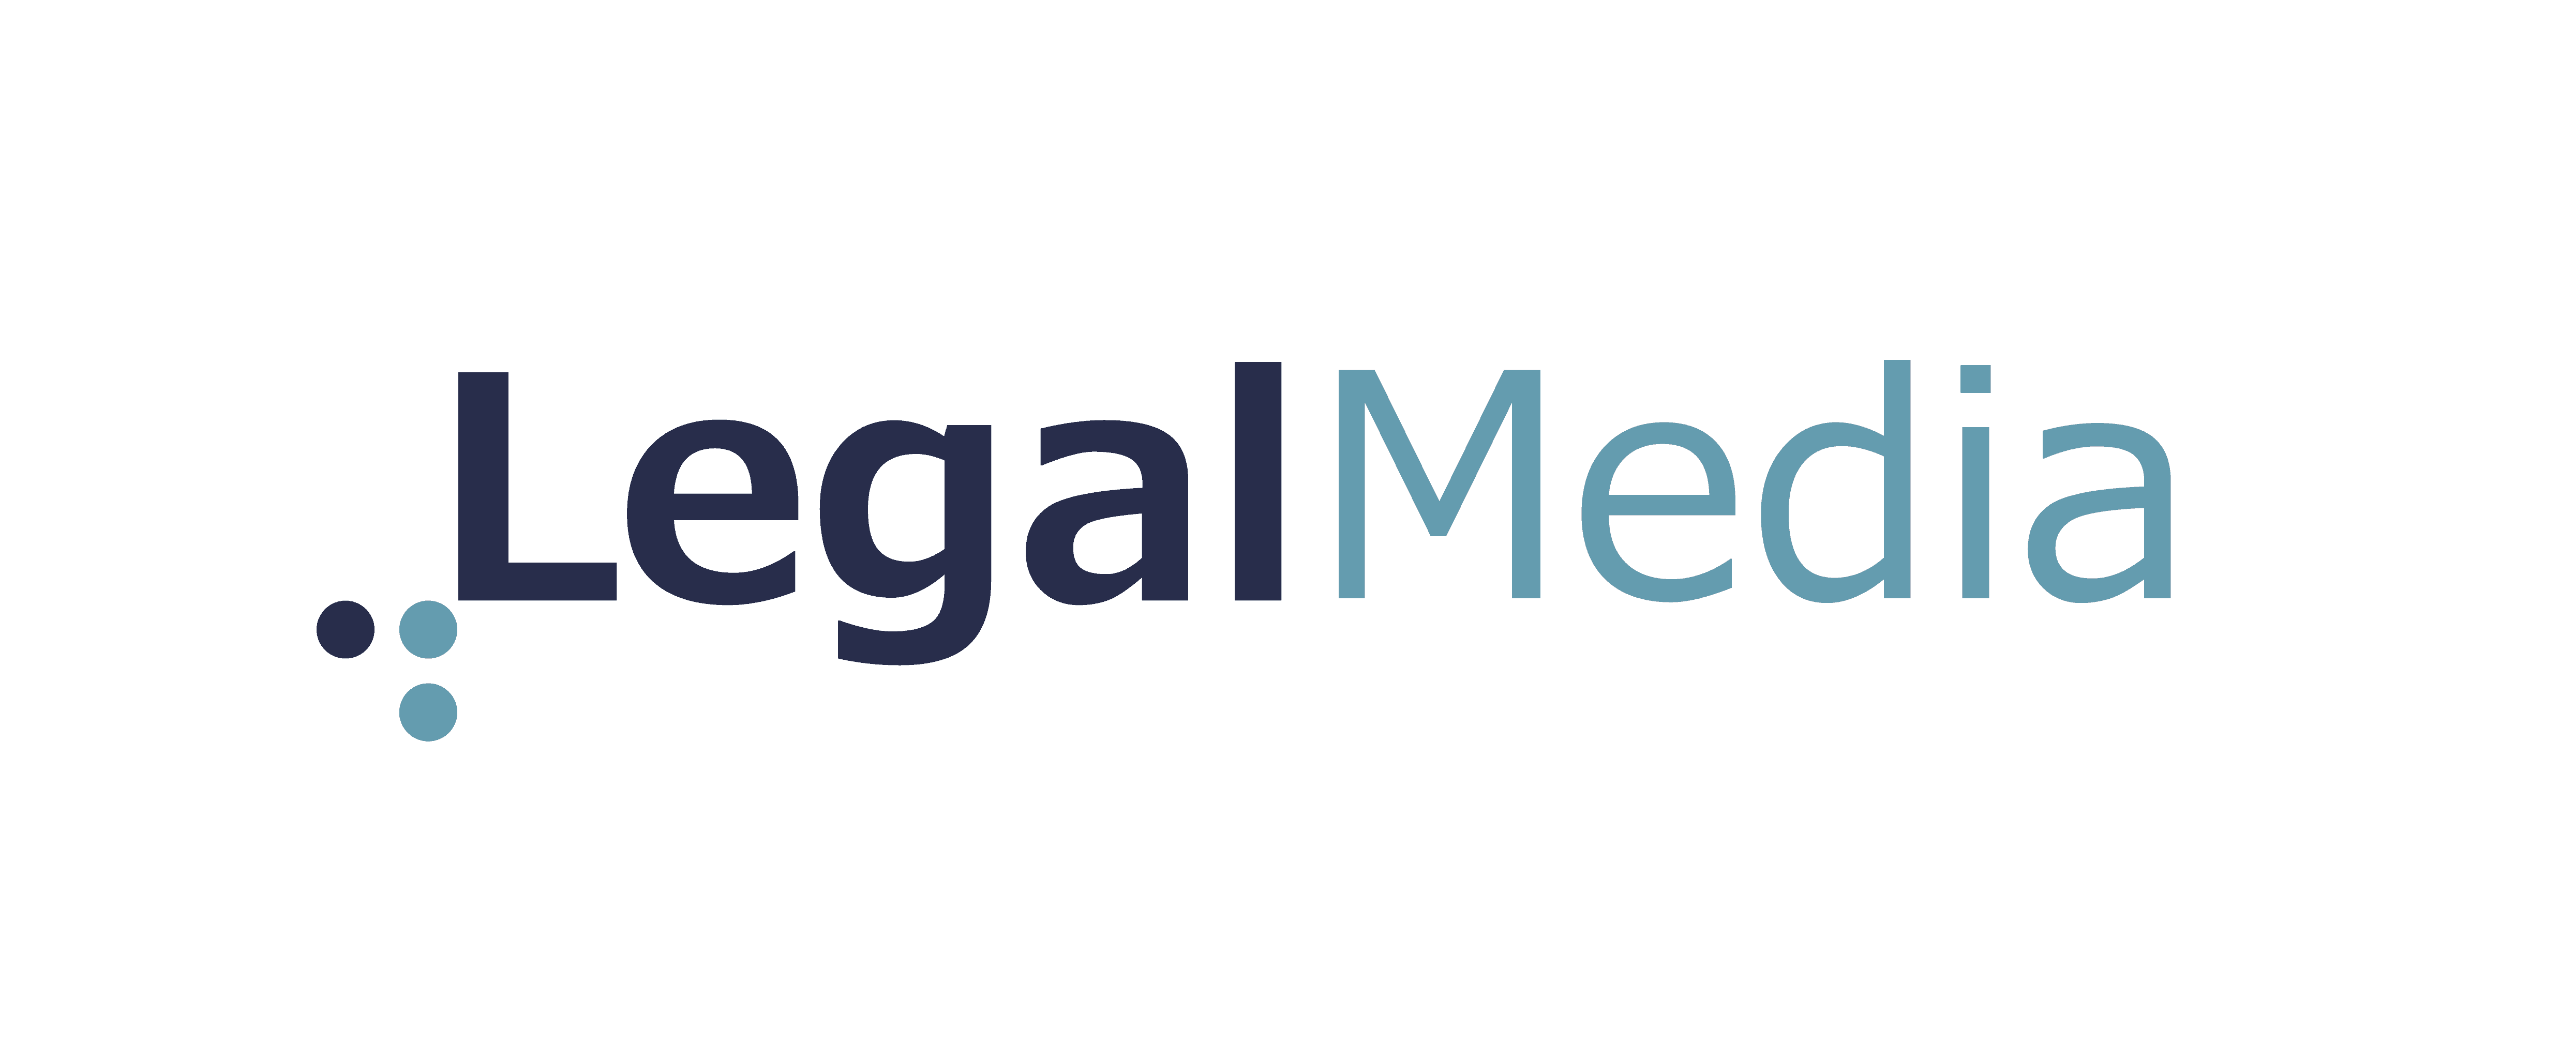 Legal Media